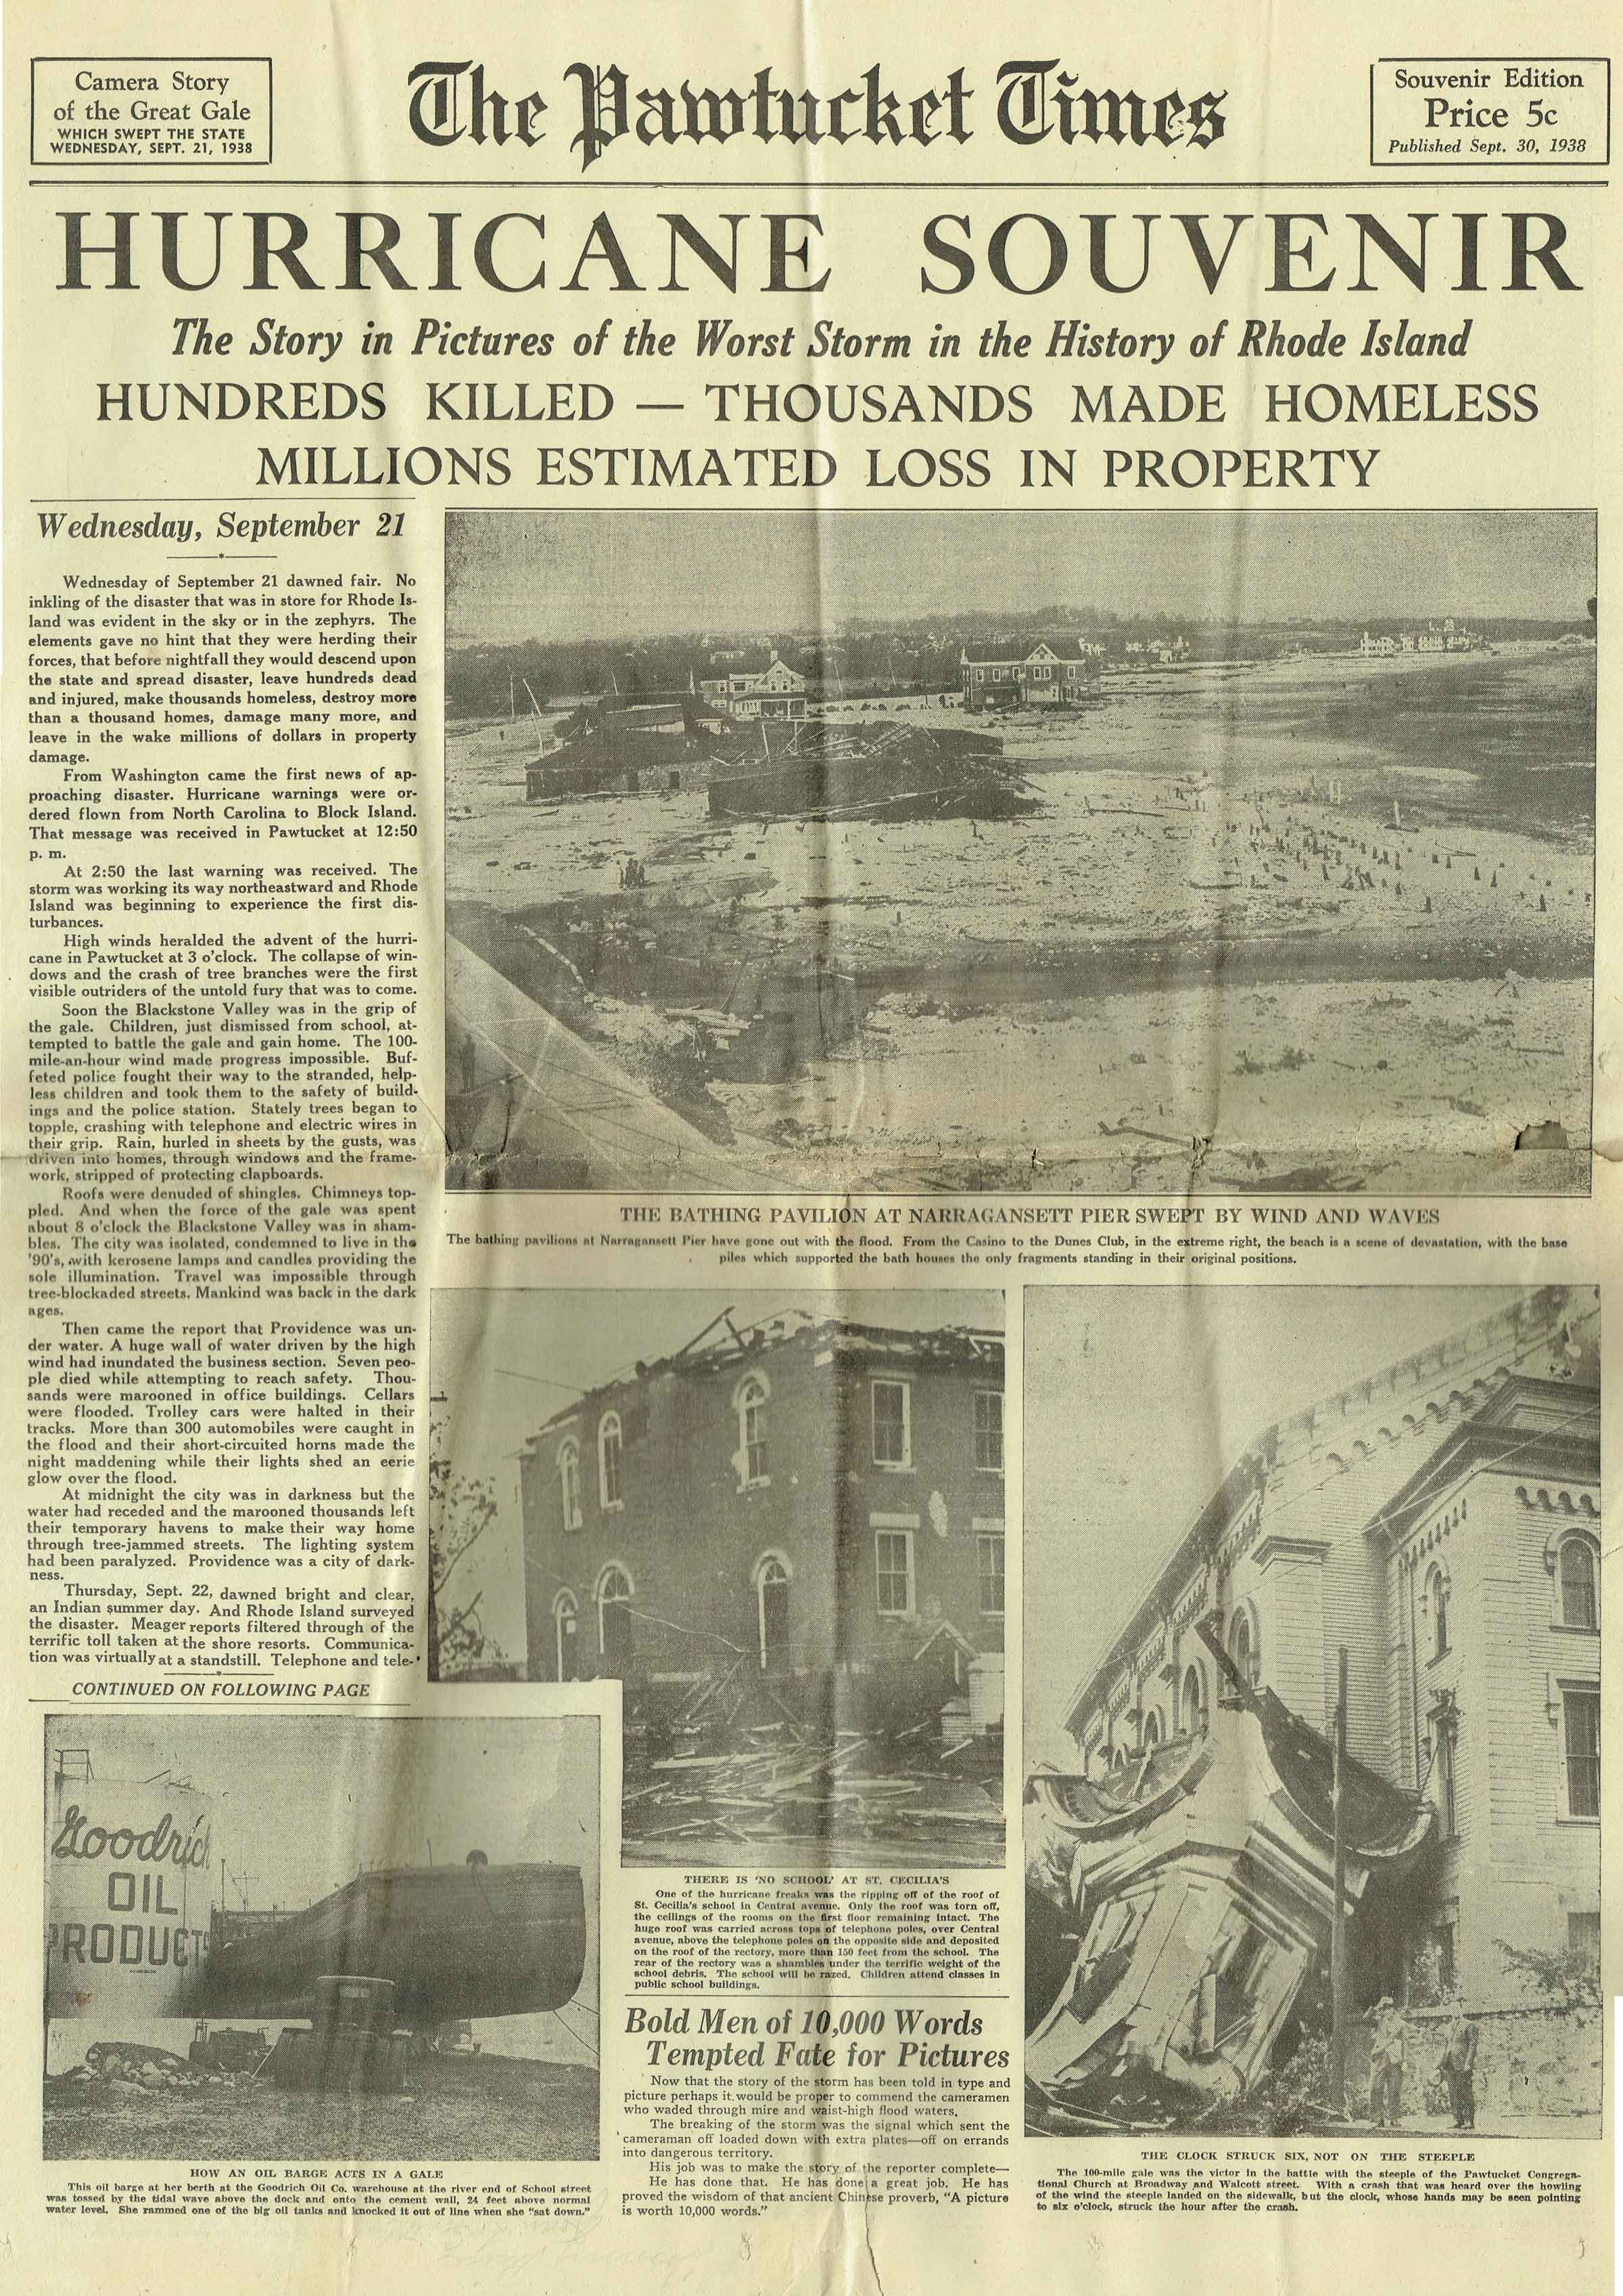 The Pawtucket Times: HURRICANE SOUVENIR, published Sept. 30, 1938 PAGE 1